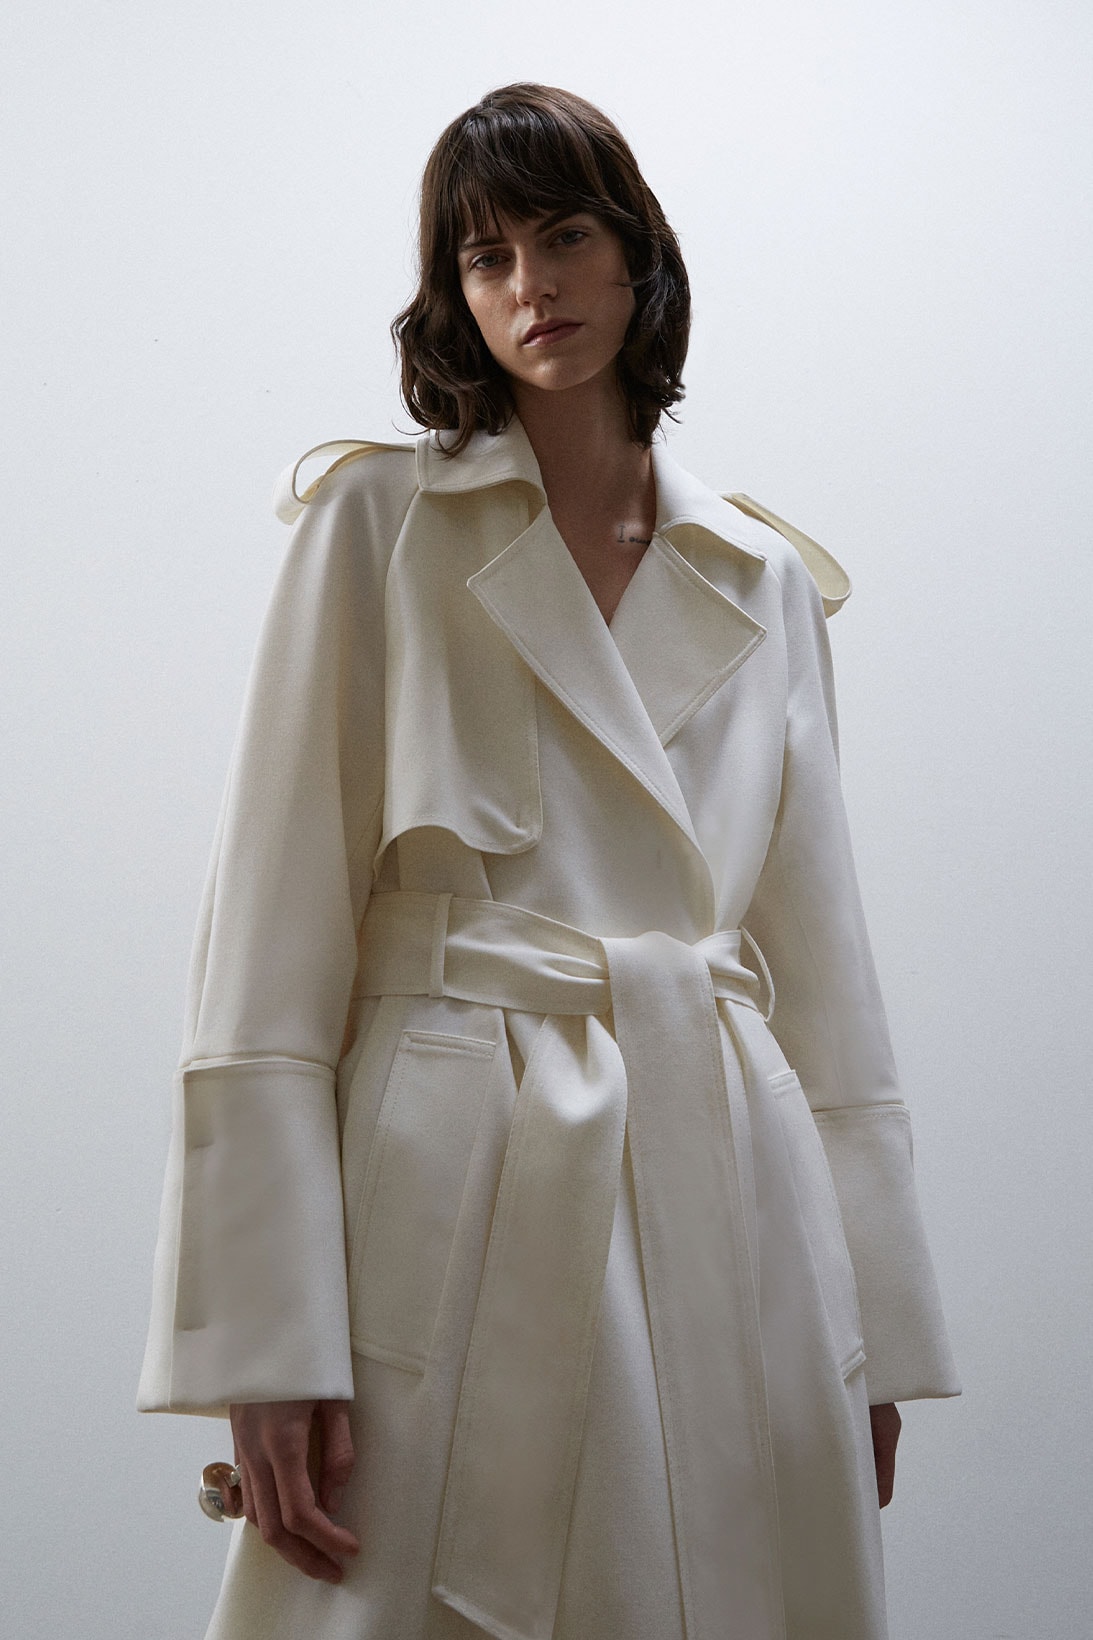 BITE Studios' Autumn/Winter 2021 Collection ivory trench coat